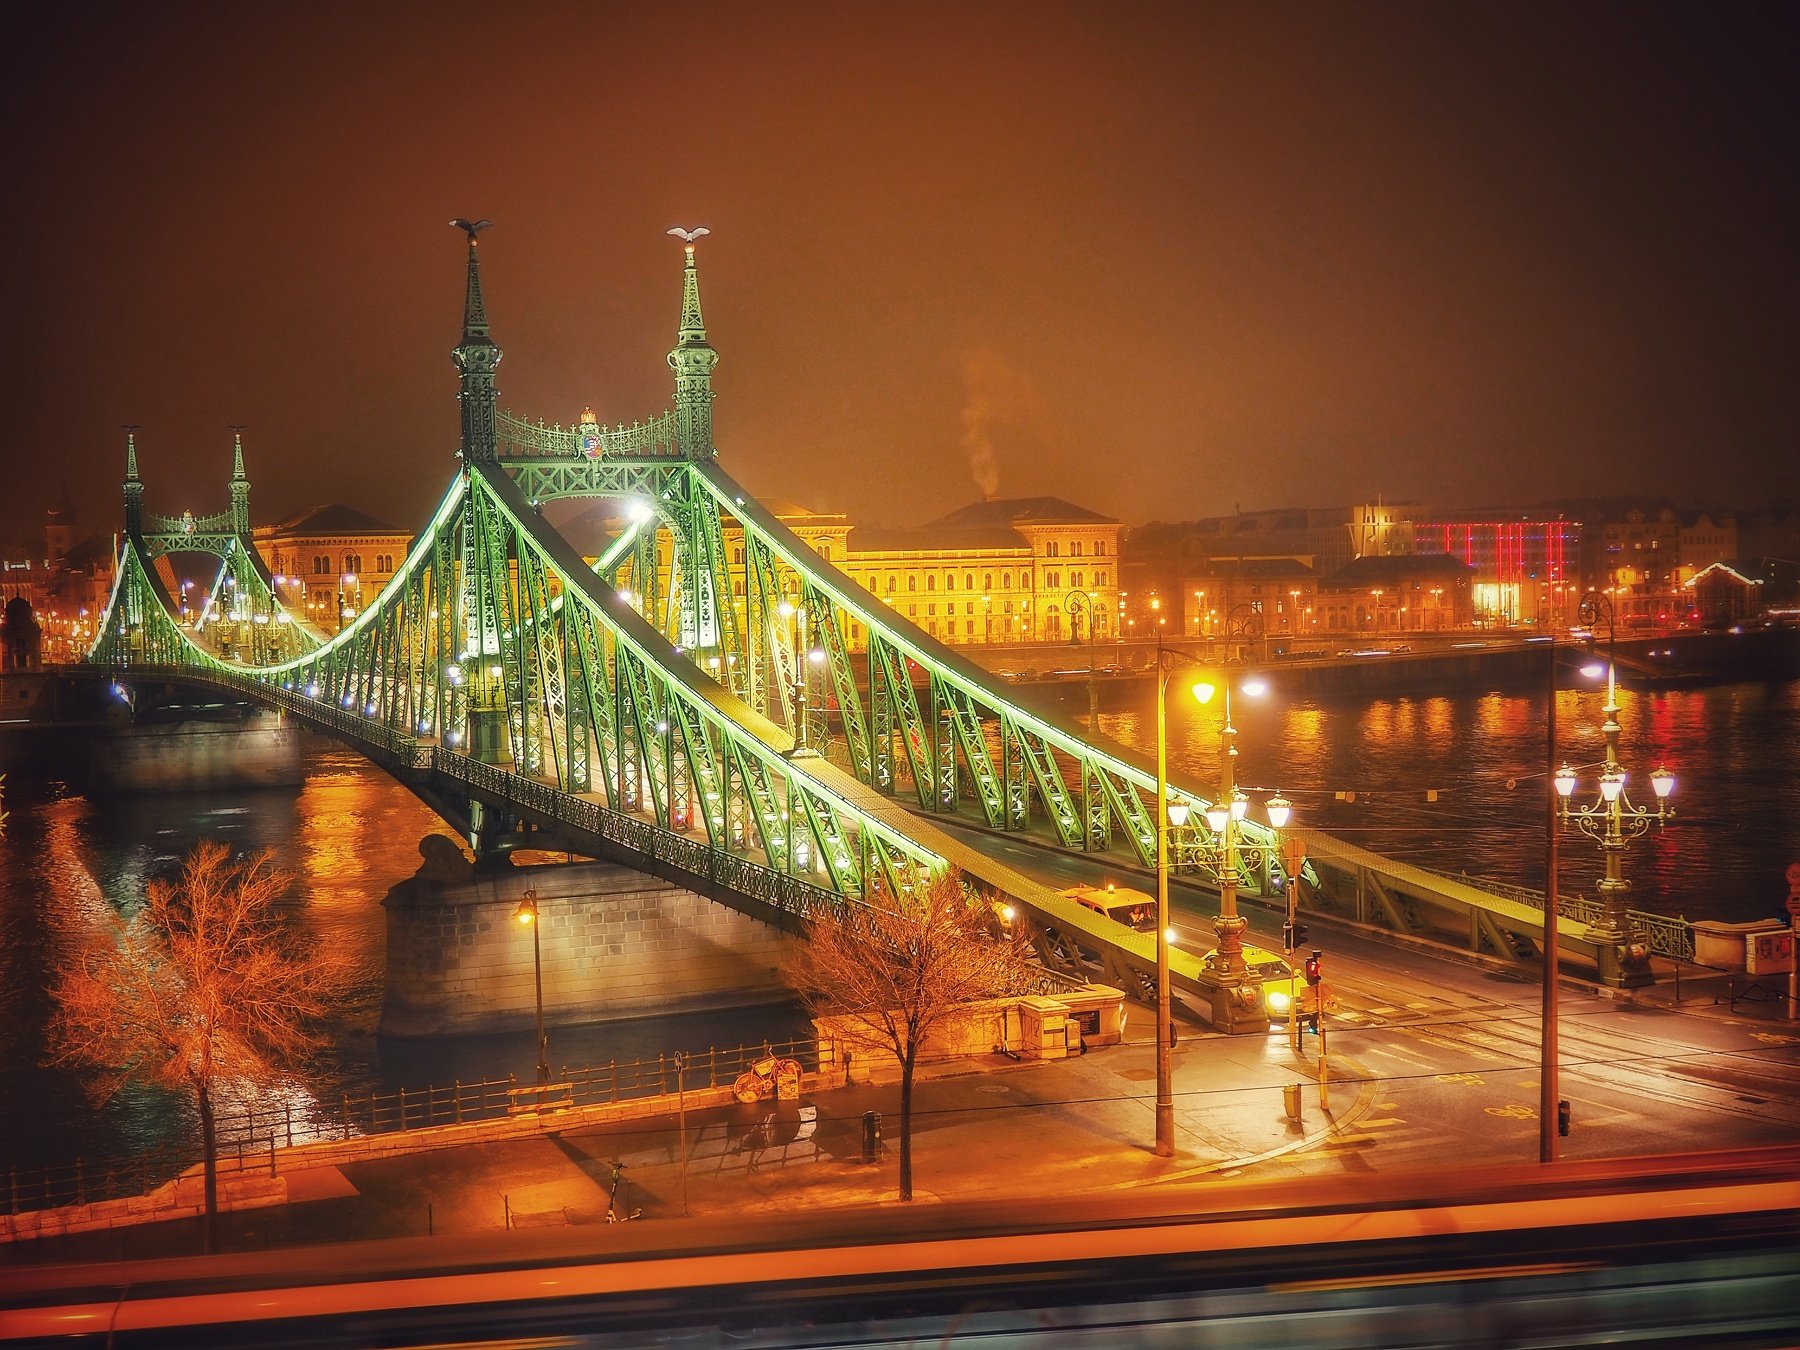 budapest, hungary, bridges, nightphotography, nightshots, night, danube river, europe, architecture, city, cityscapes, city life, night life, photography, artphotography,, Adrian Eperjessy